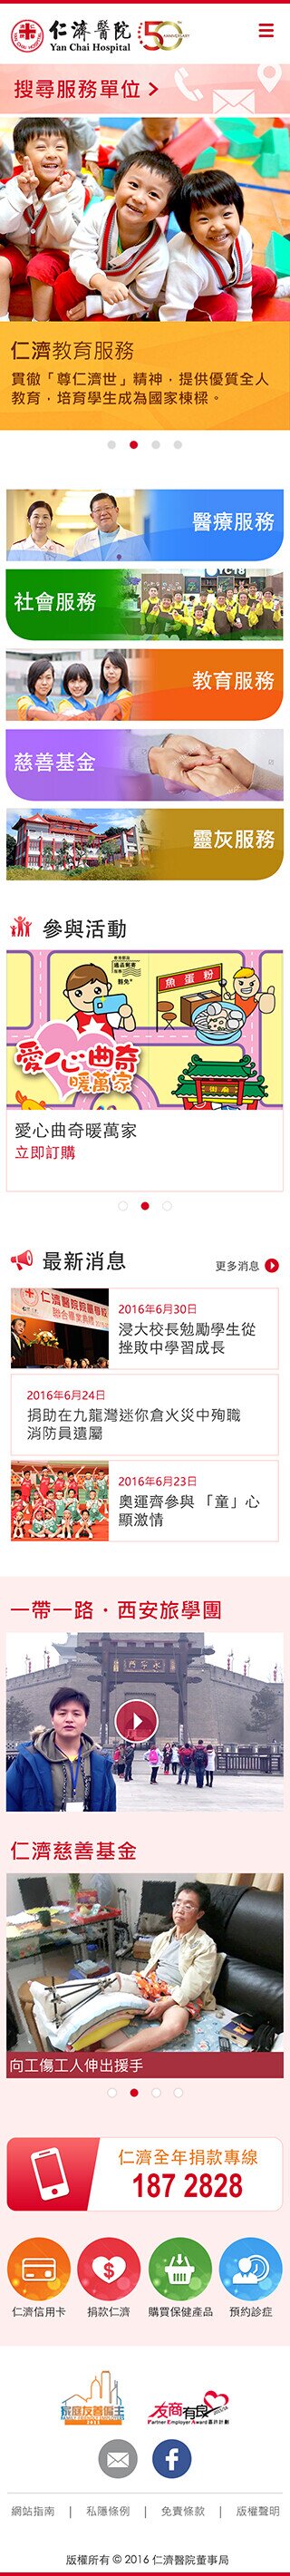 Yan Chai Hospital website screenshot for mobile version 1 of 5